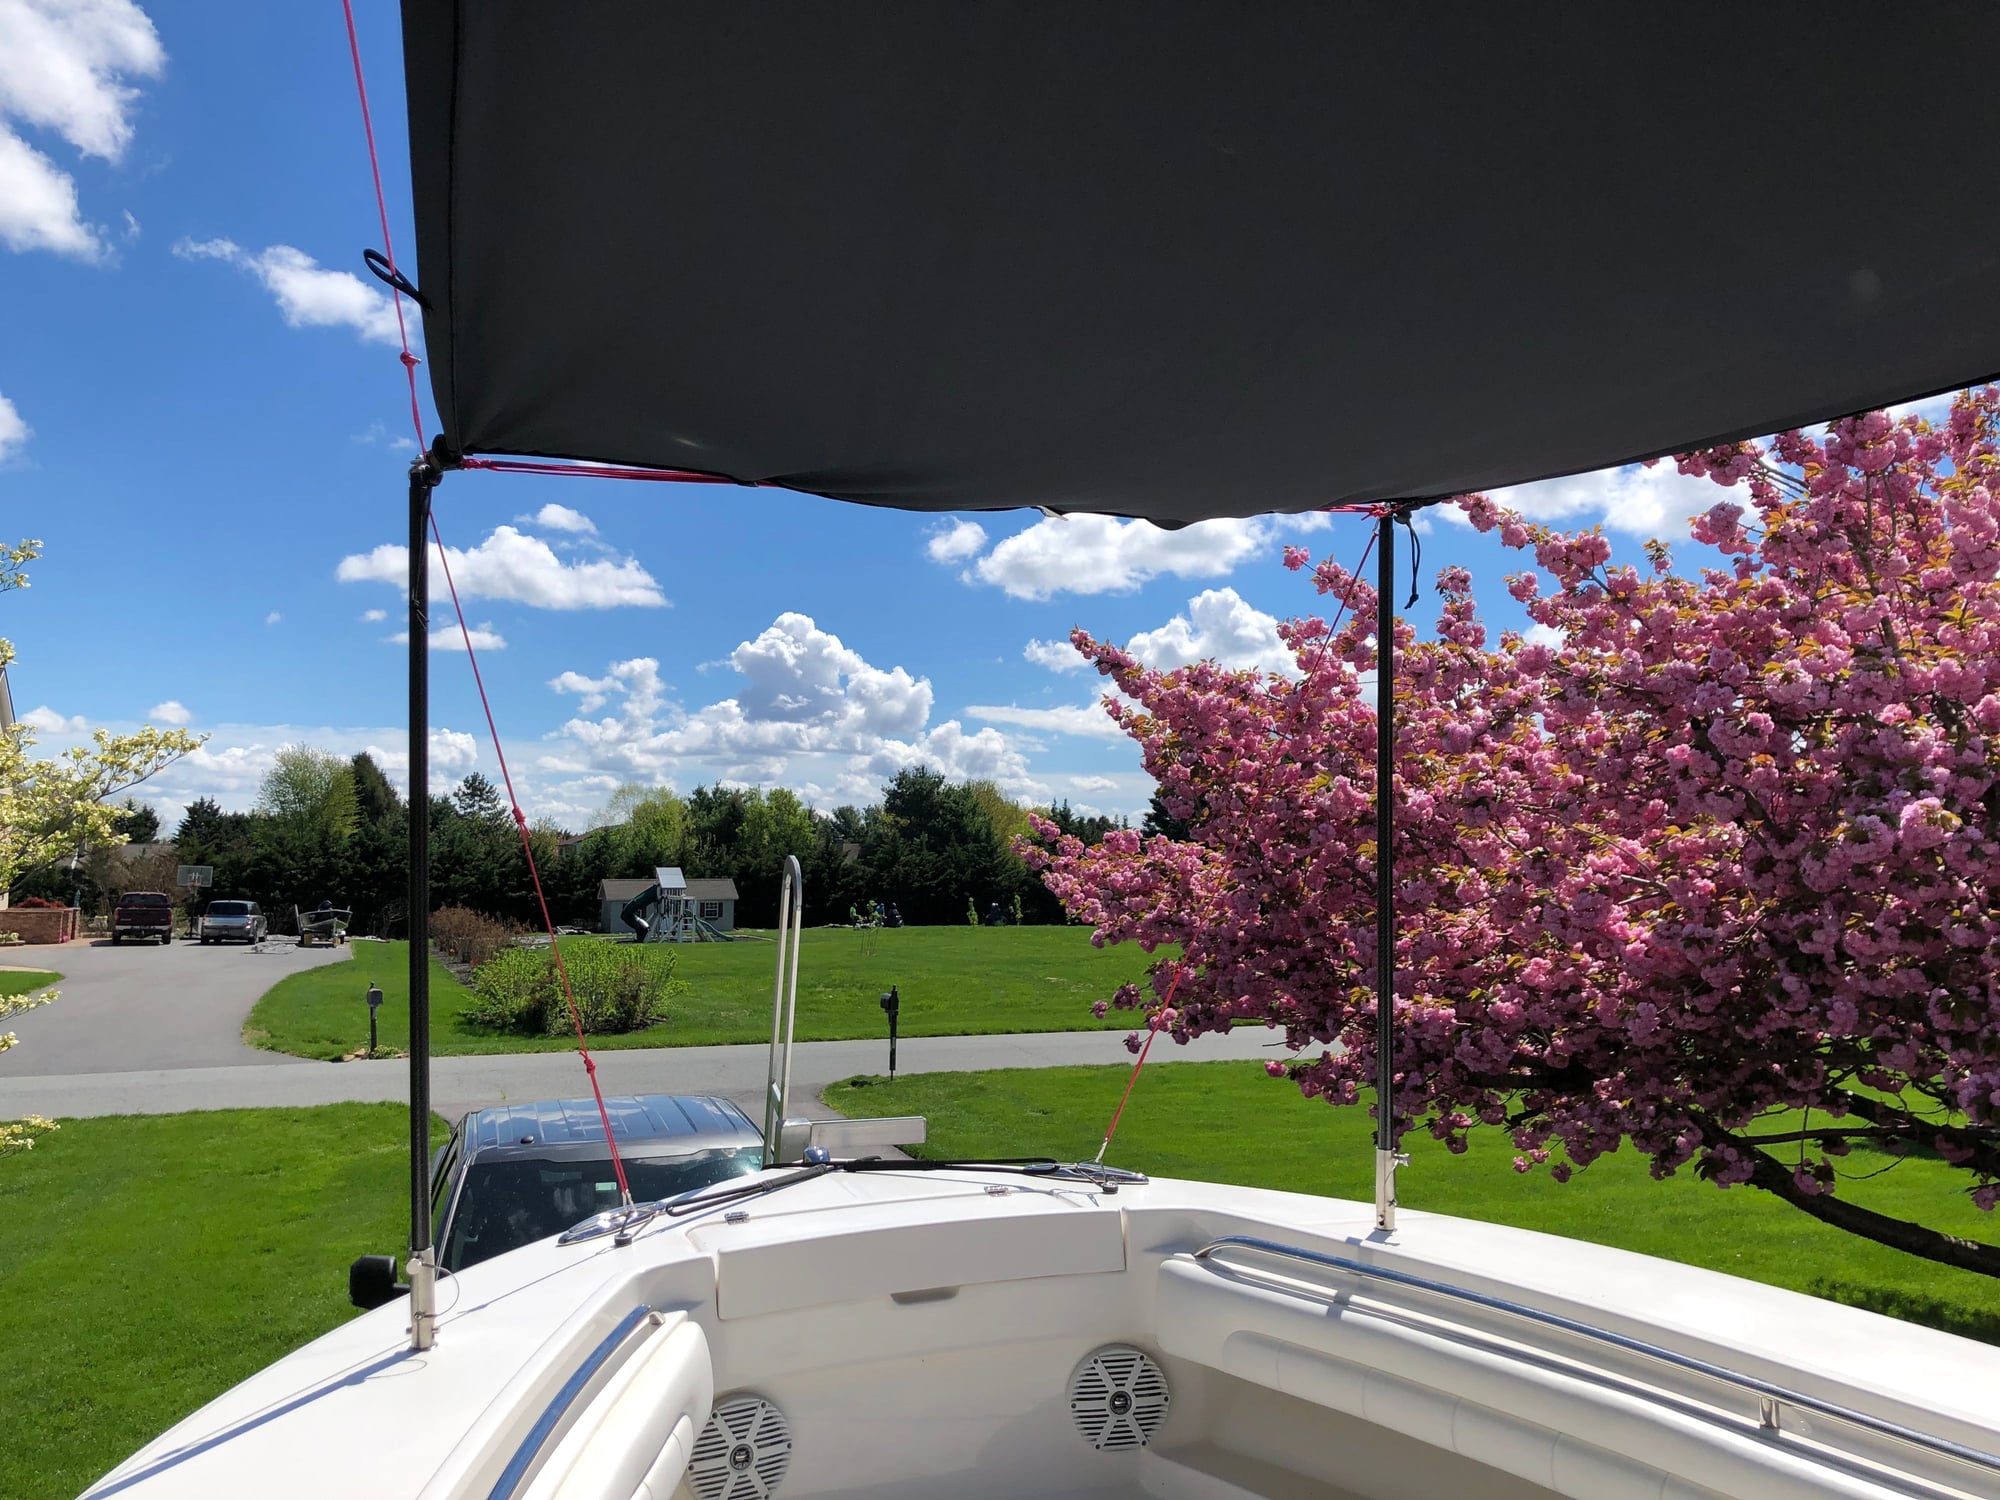 Sun shade in the boat? - Outdoor Gear Forum - Outdoor Gear Forum